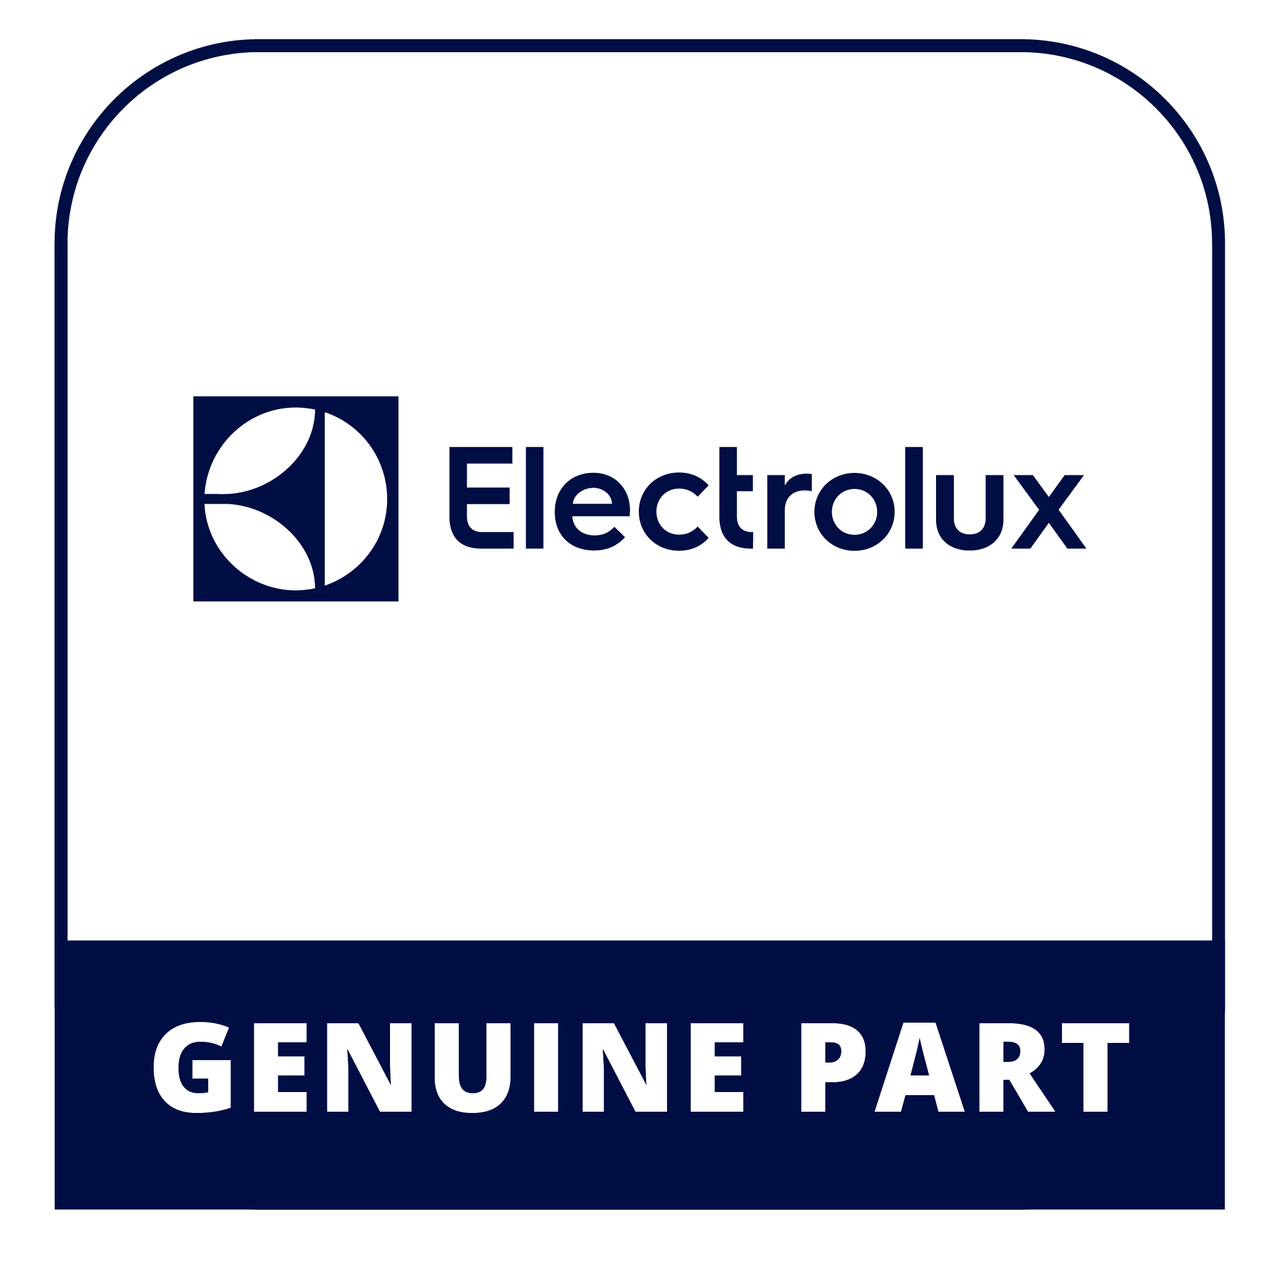 Frigidaire - Electrolux 5303210167 Regulator - Genuine Electrolux Part